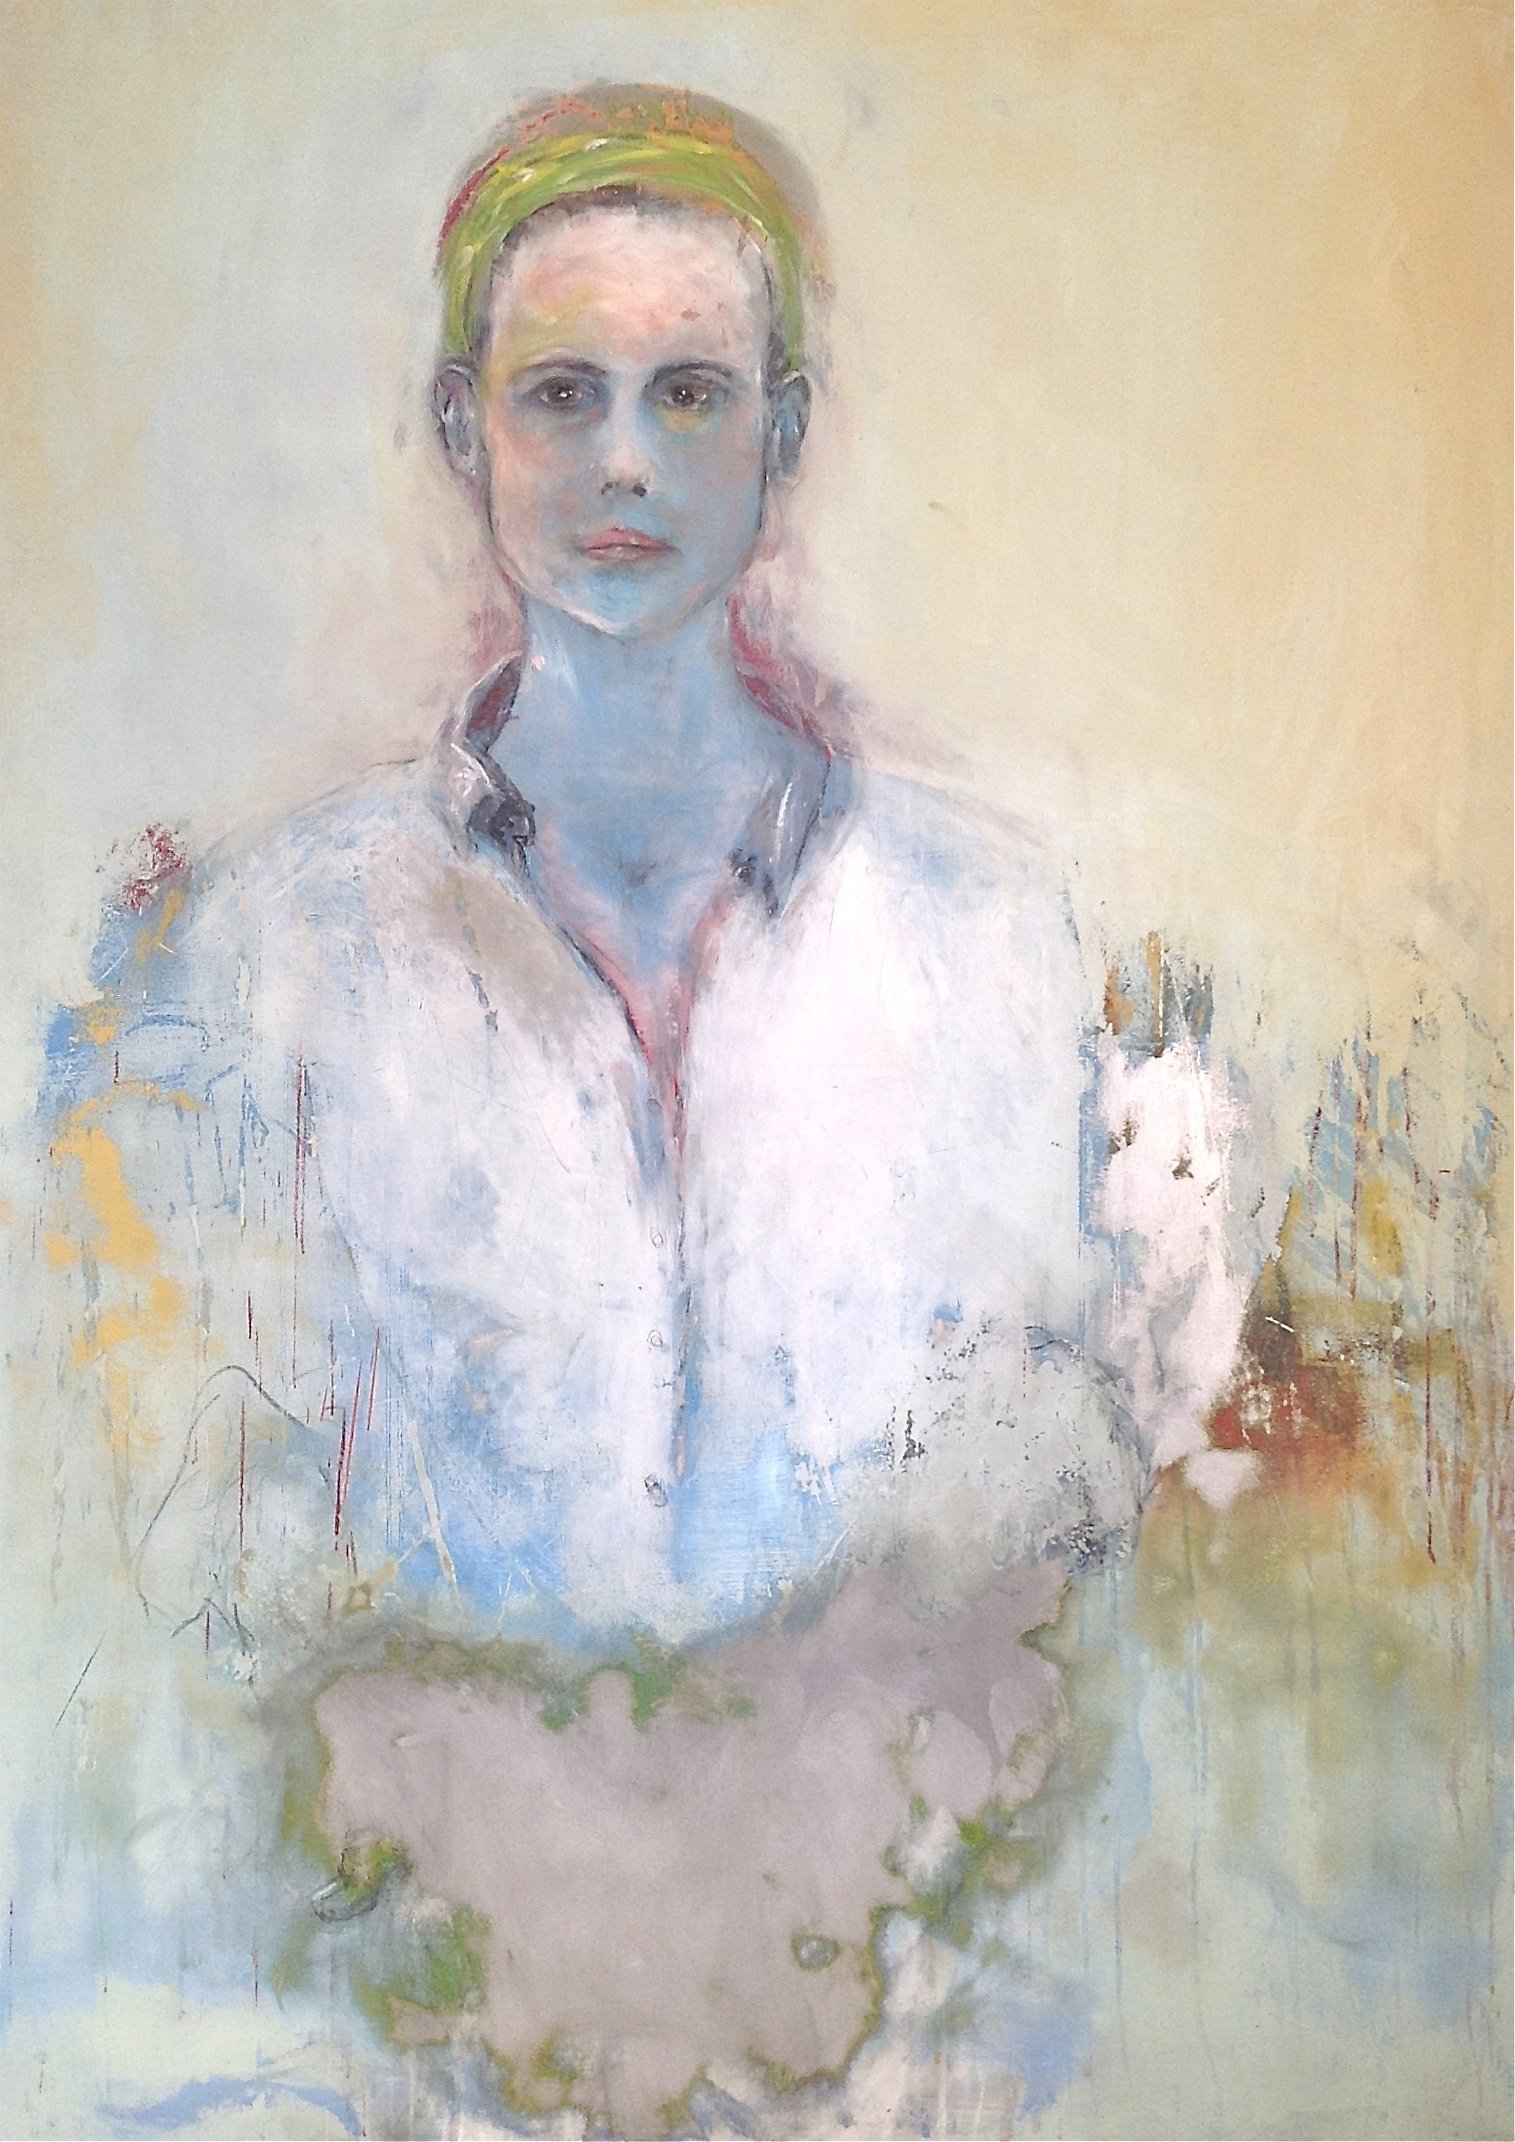  Self Portrait in Big Shirt  62” x 48”, oil on aluminum, 2016 